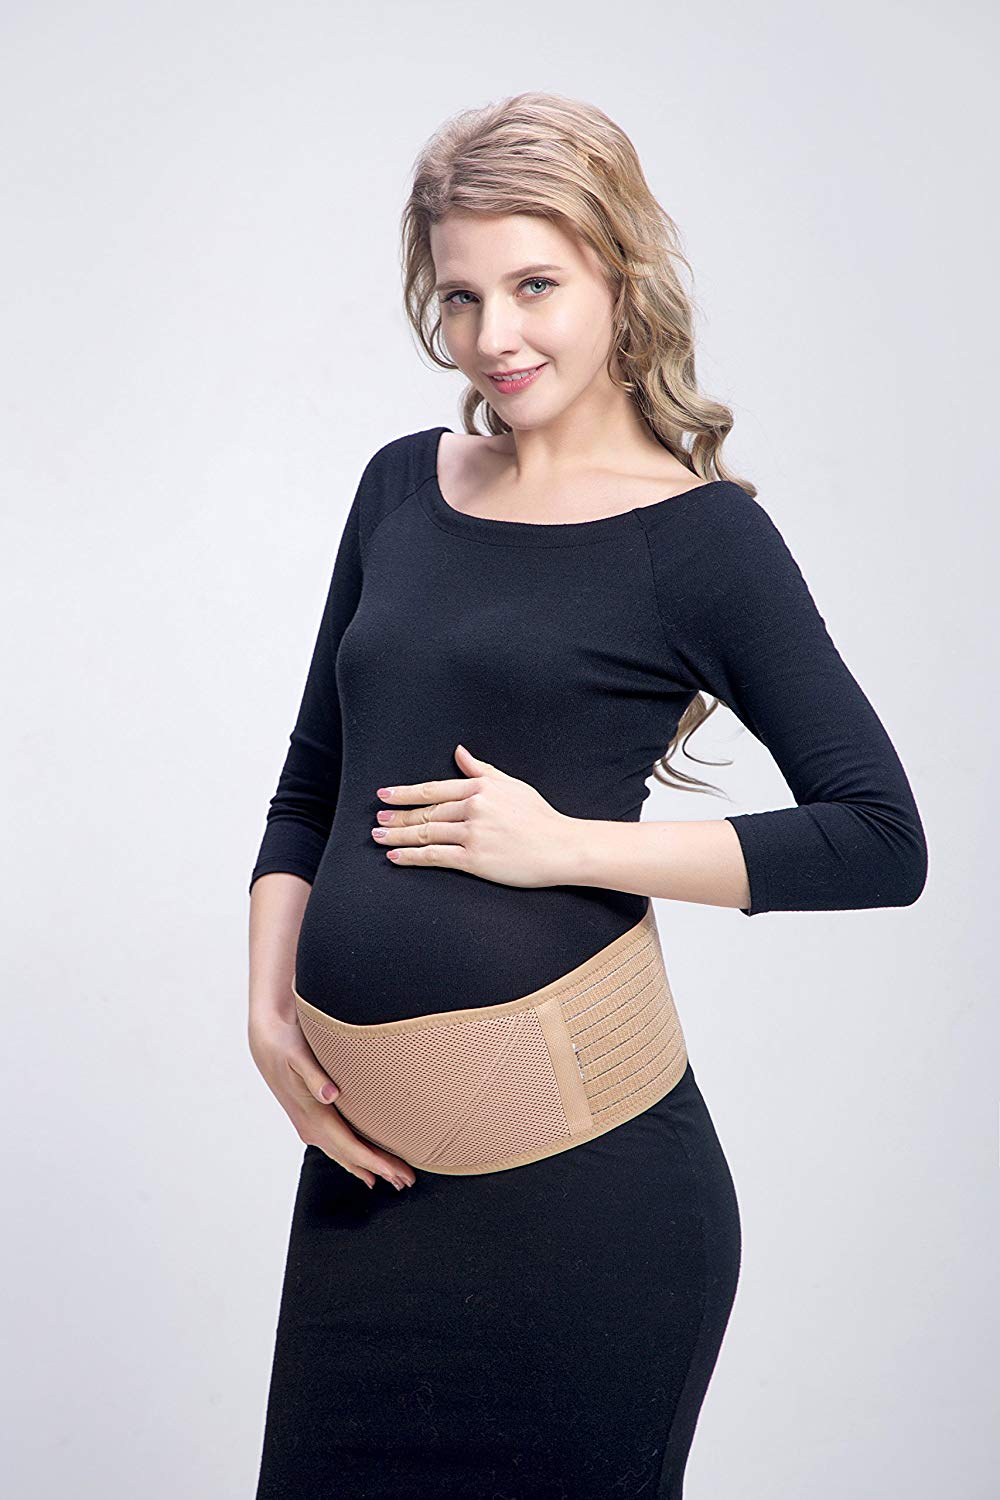 BABII JOEY Maternity Support Belt